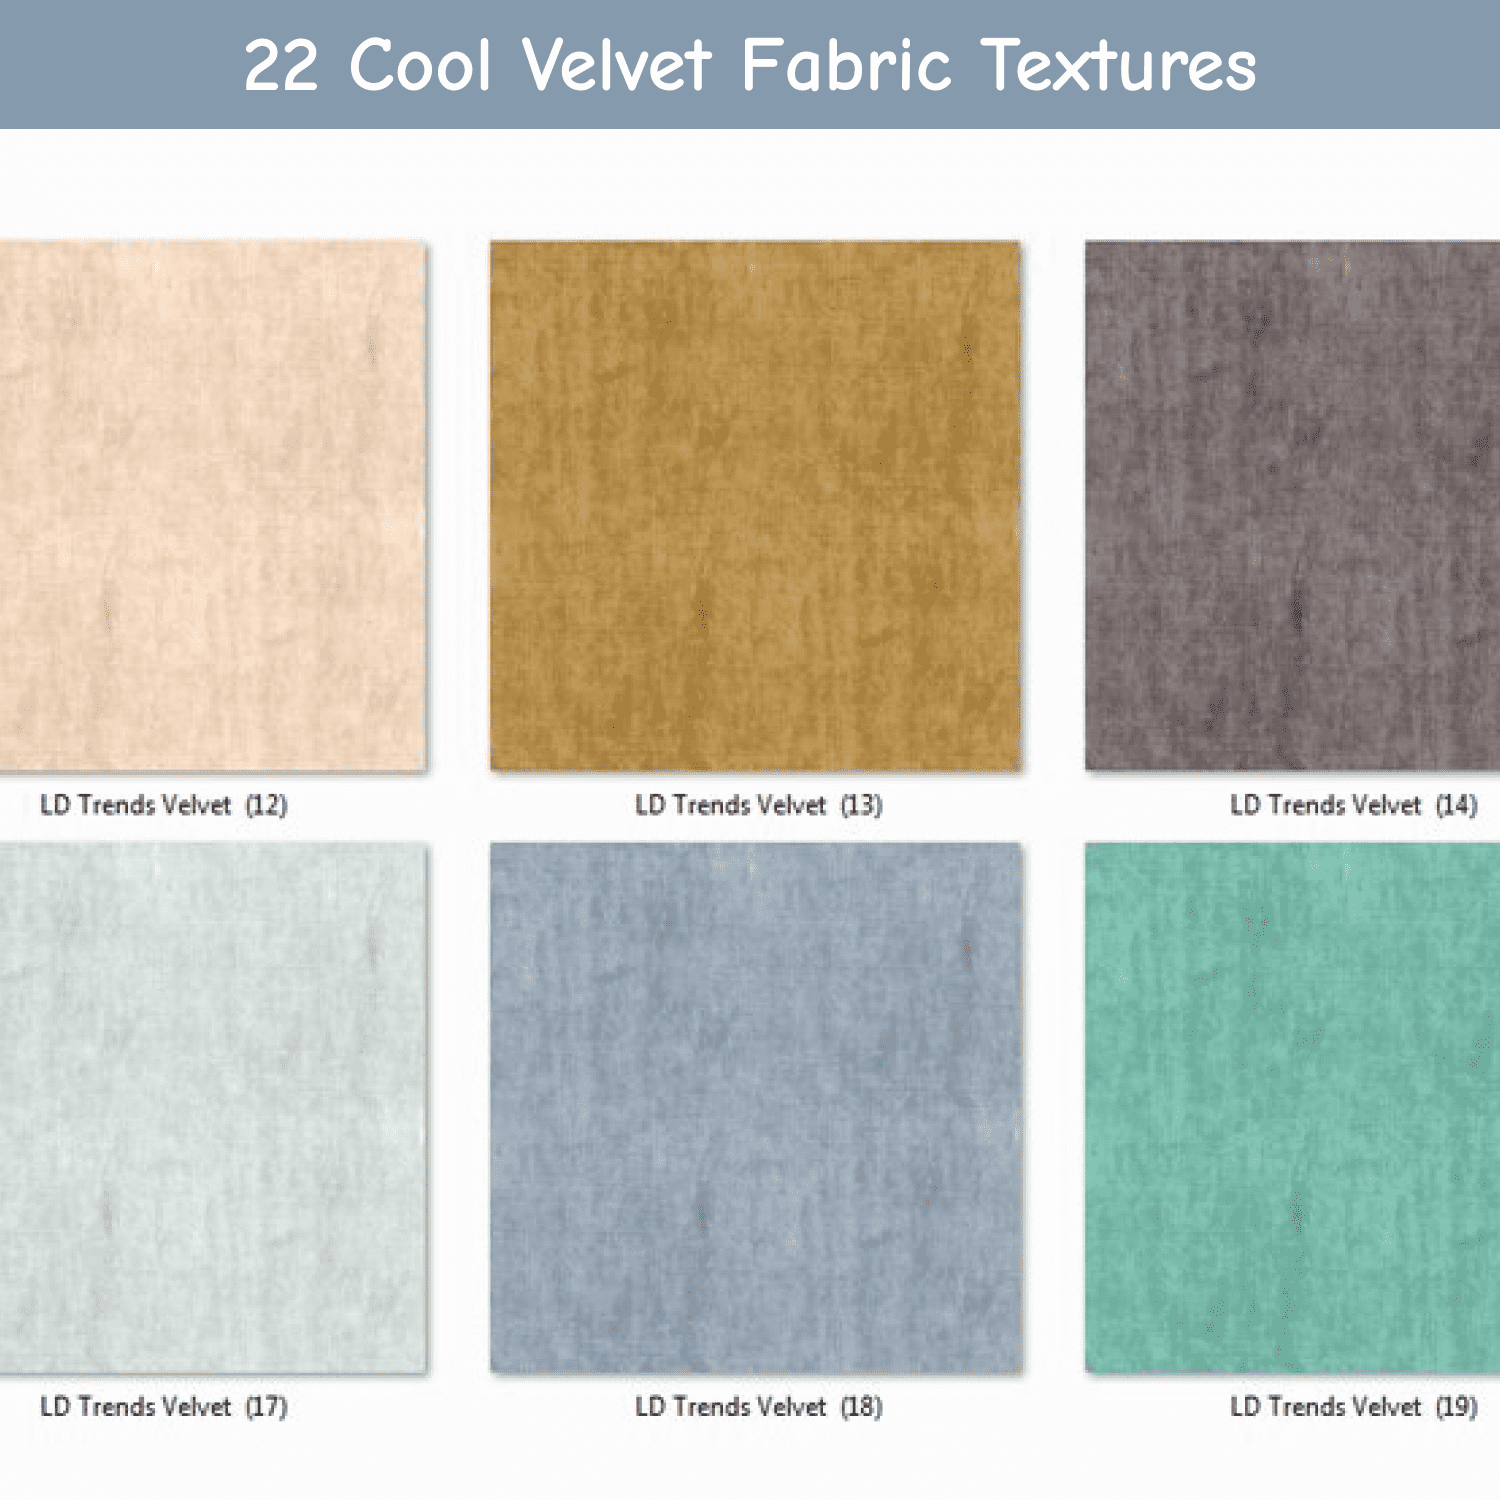 22 Cool Velvet Fabric Textures.